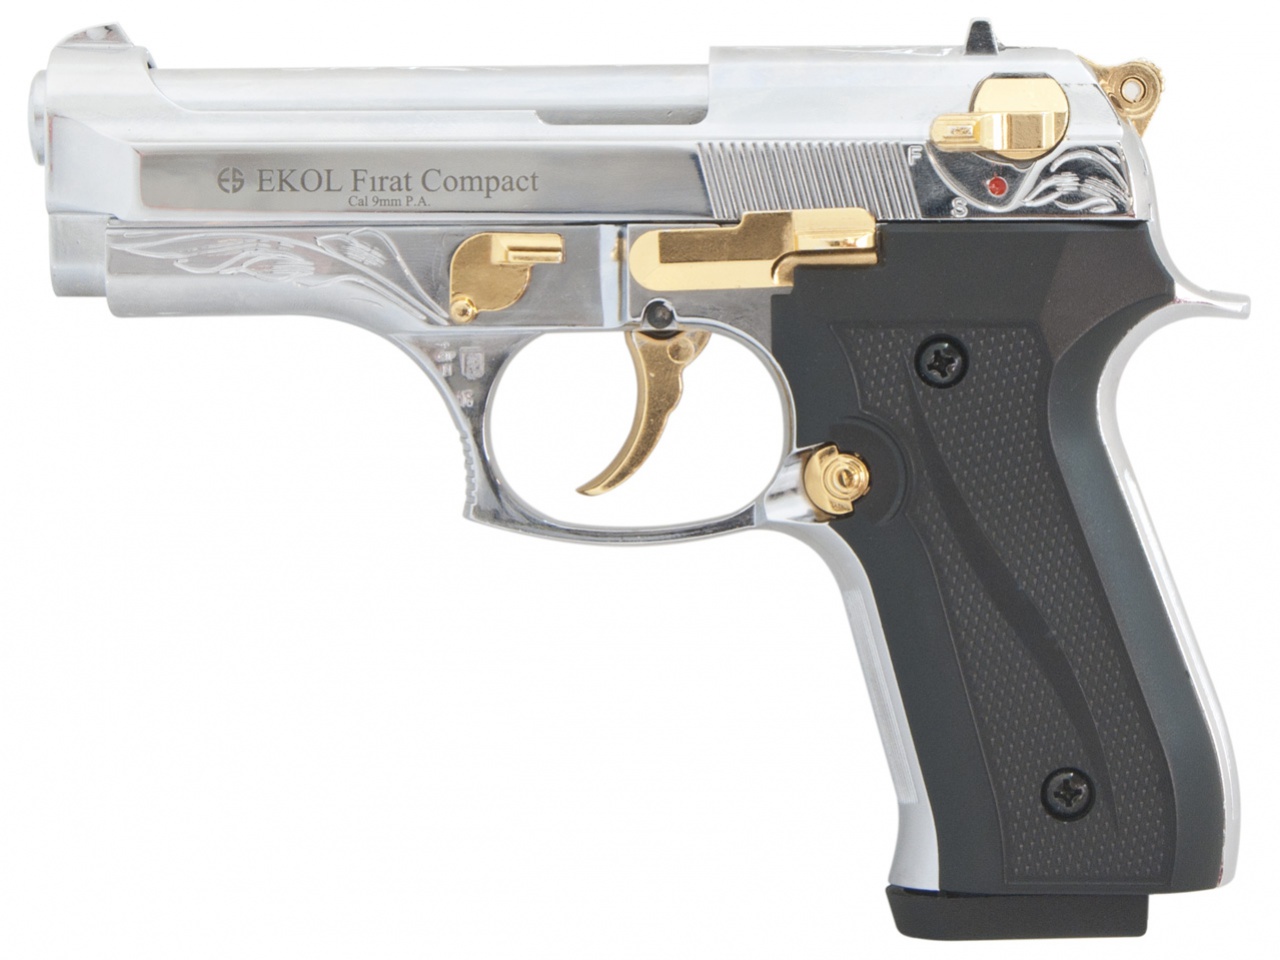 Plynová pistole Ekol Firat Compact chrom gold s rytinou cal.9mm